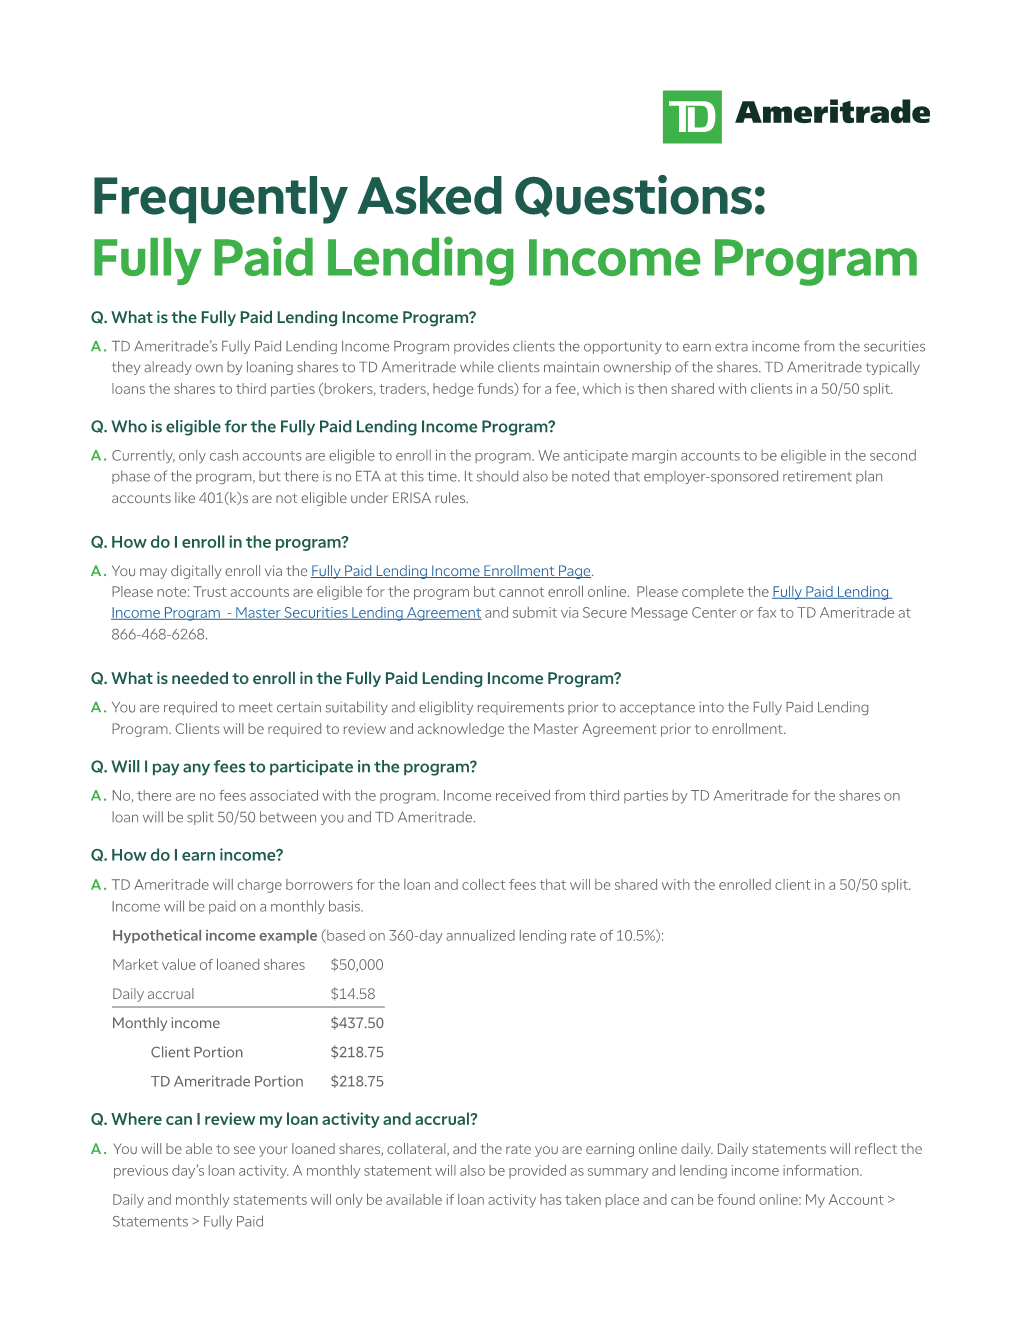 Fully Paid Lending Income Program FAQ-TDA 0521